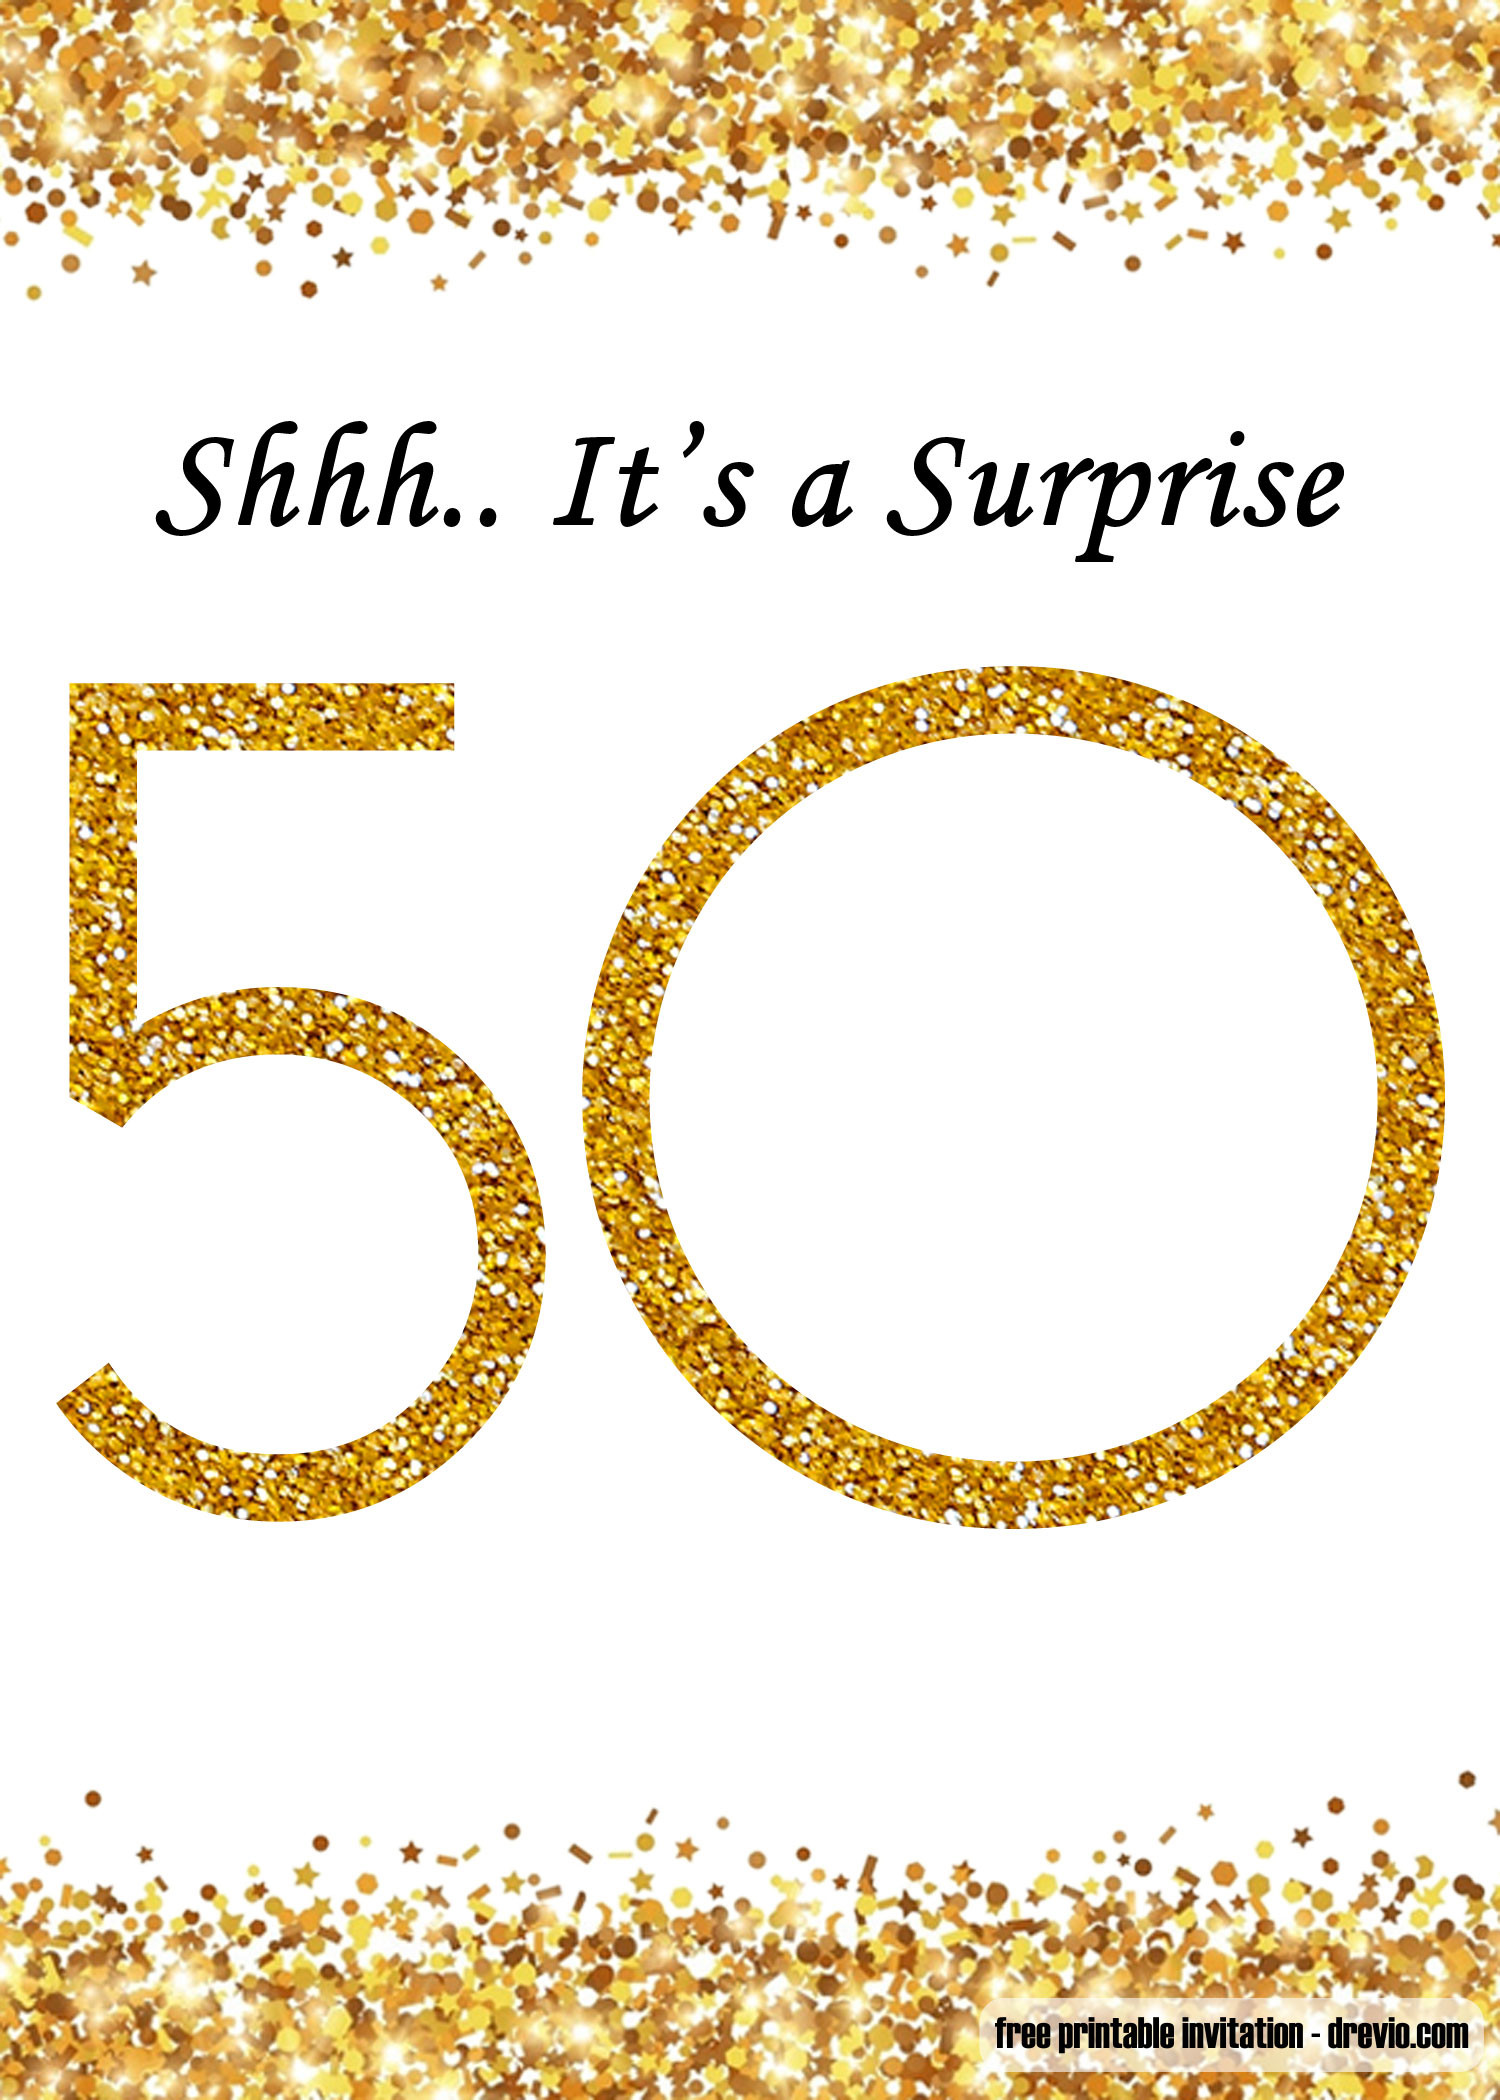 Free Printable Surprise Birthday Invitations
 FREE Printable Surprise 50th Birthday Invitation Templates